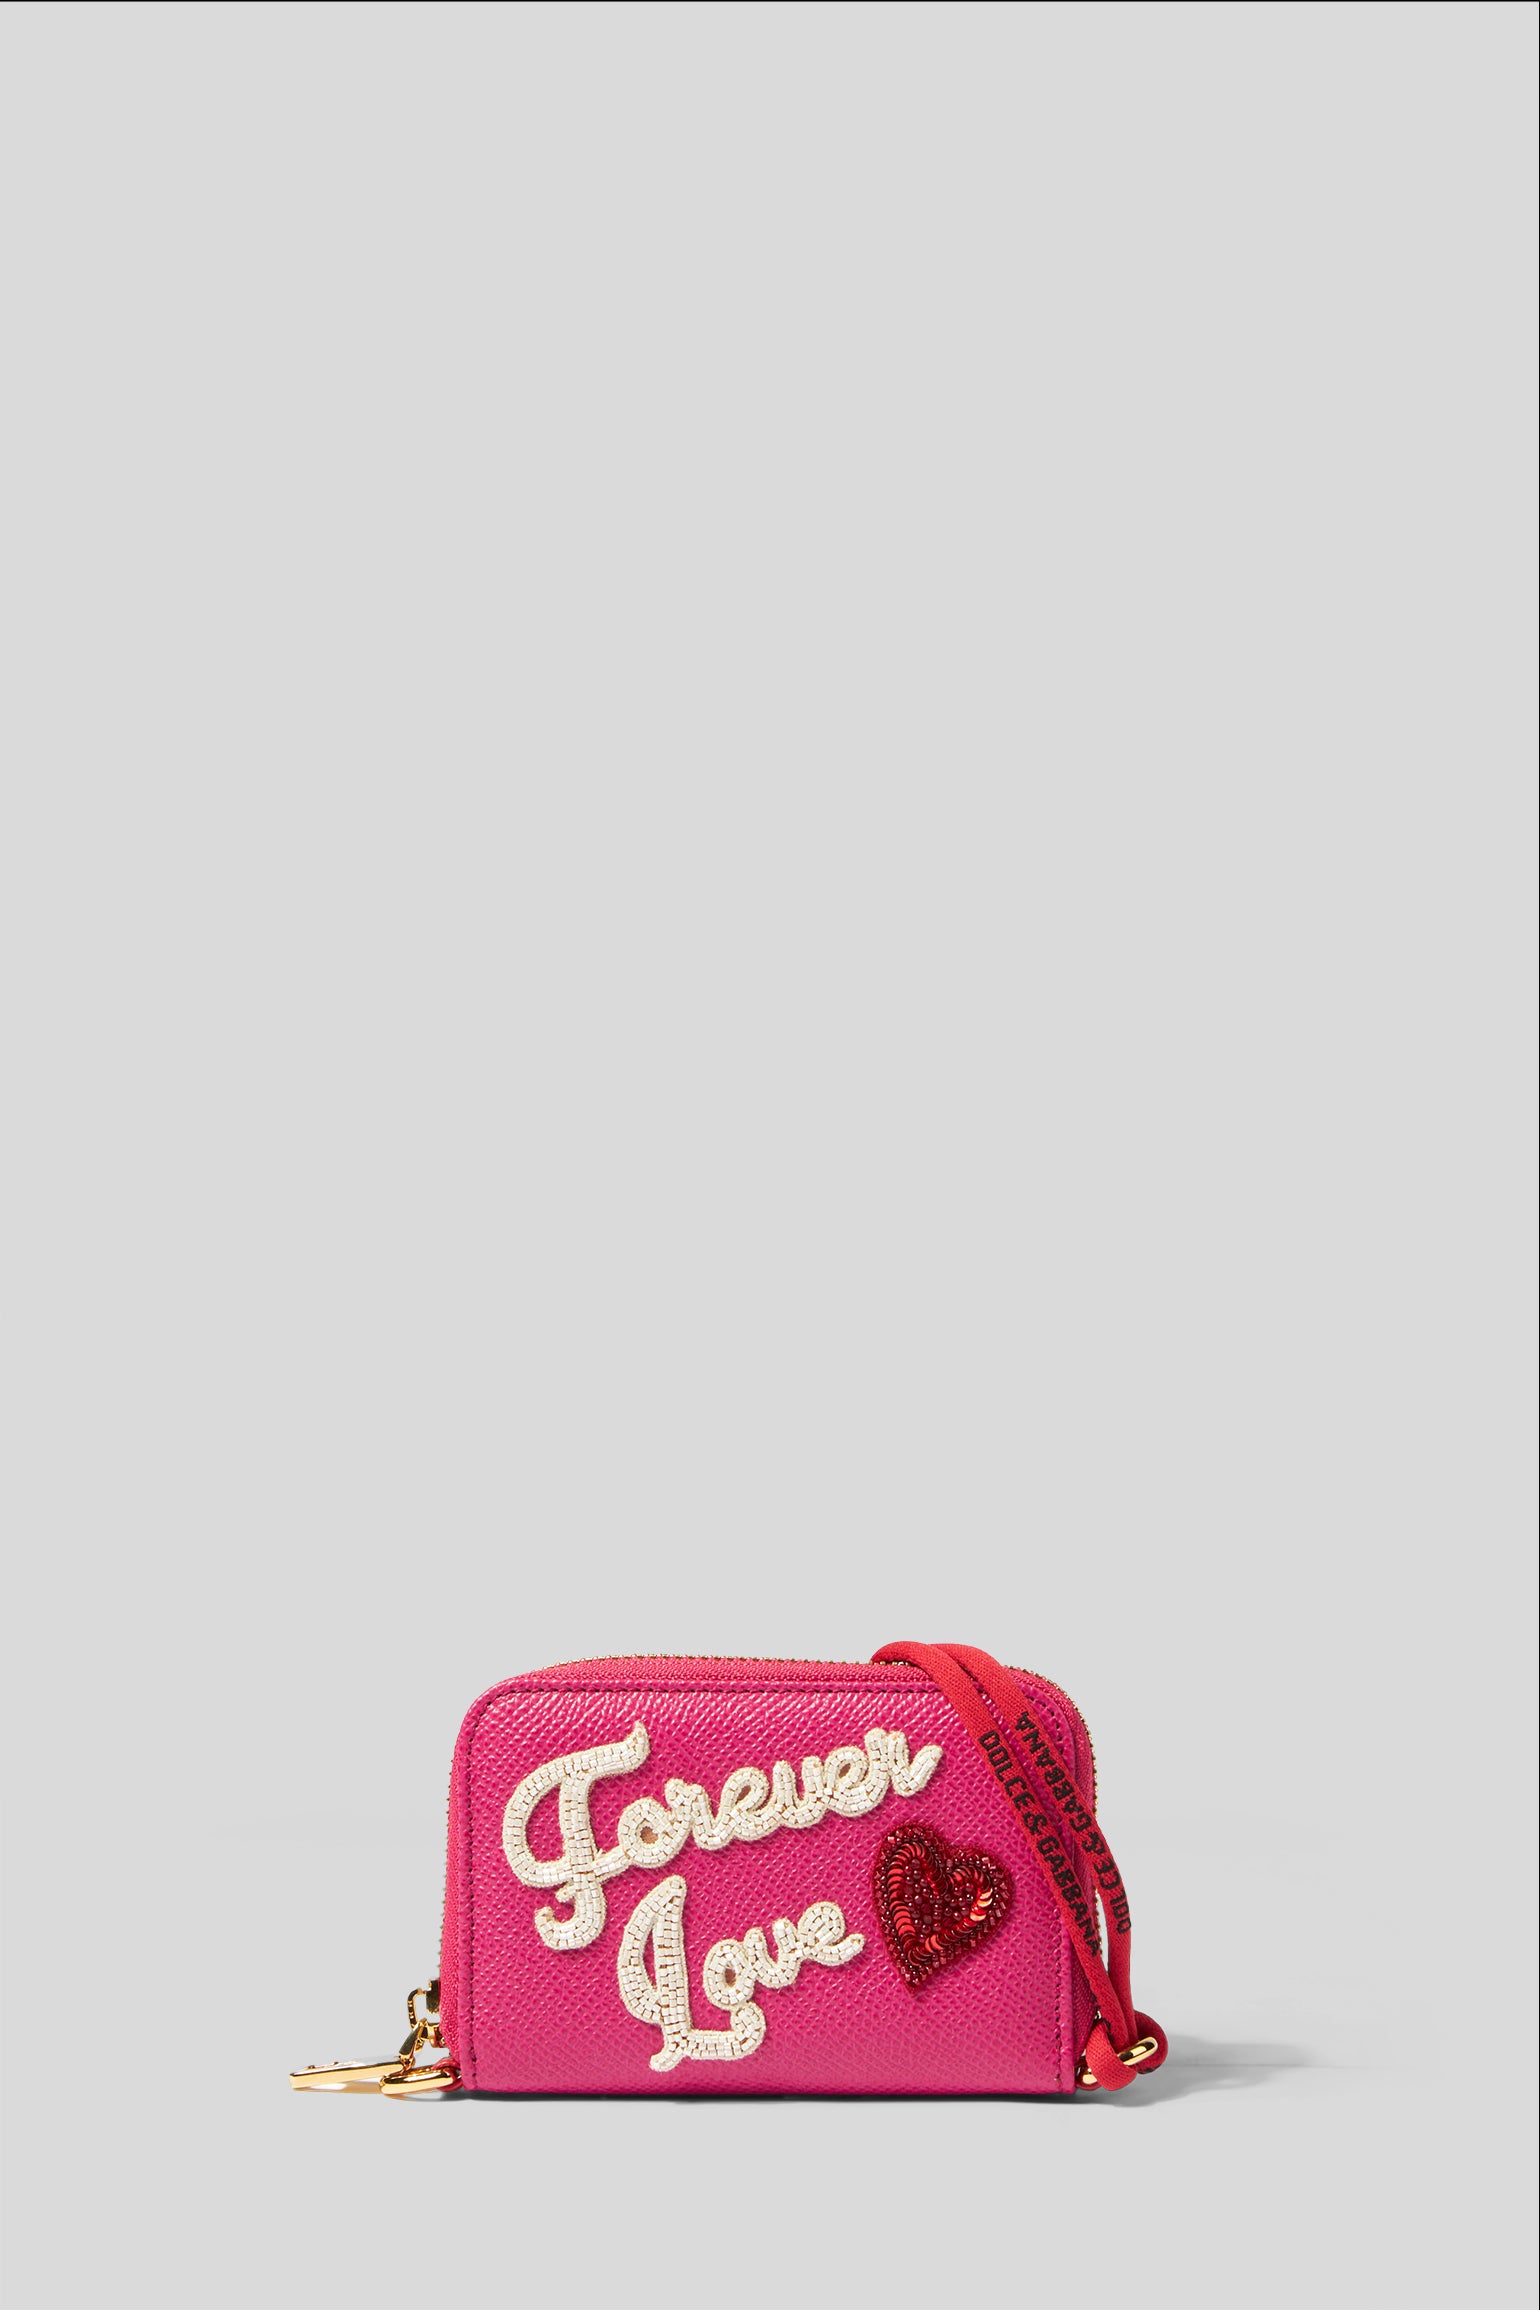 DOLCE & GABBANA "Forever Love" purse